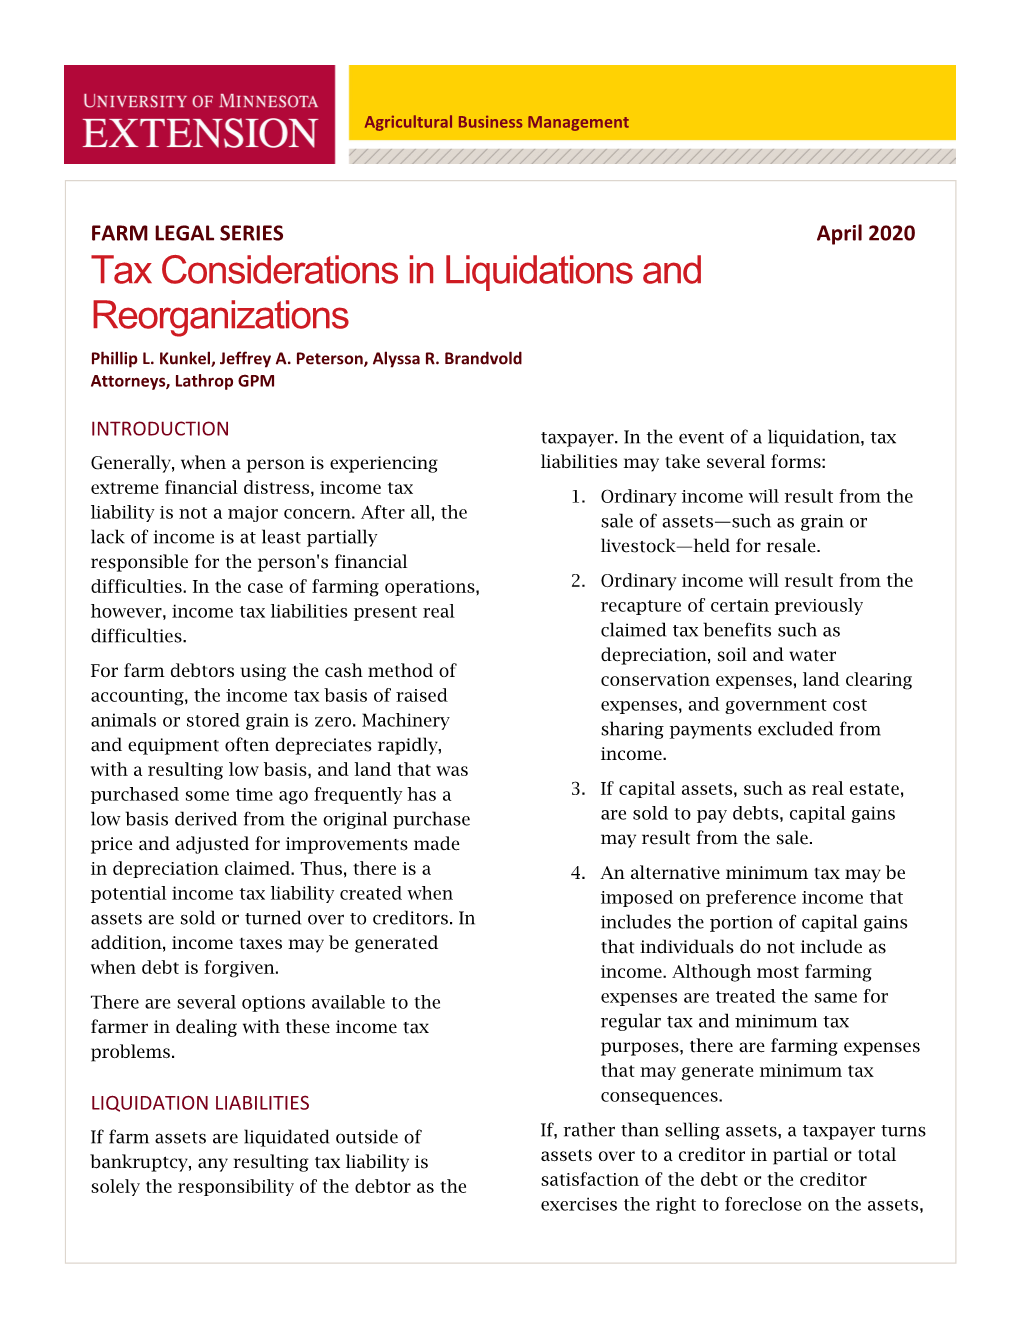 Tax Considerations in Liquidations and Reorganizations Phillip L